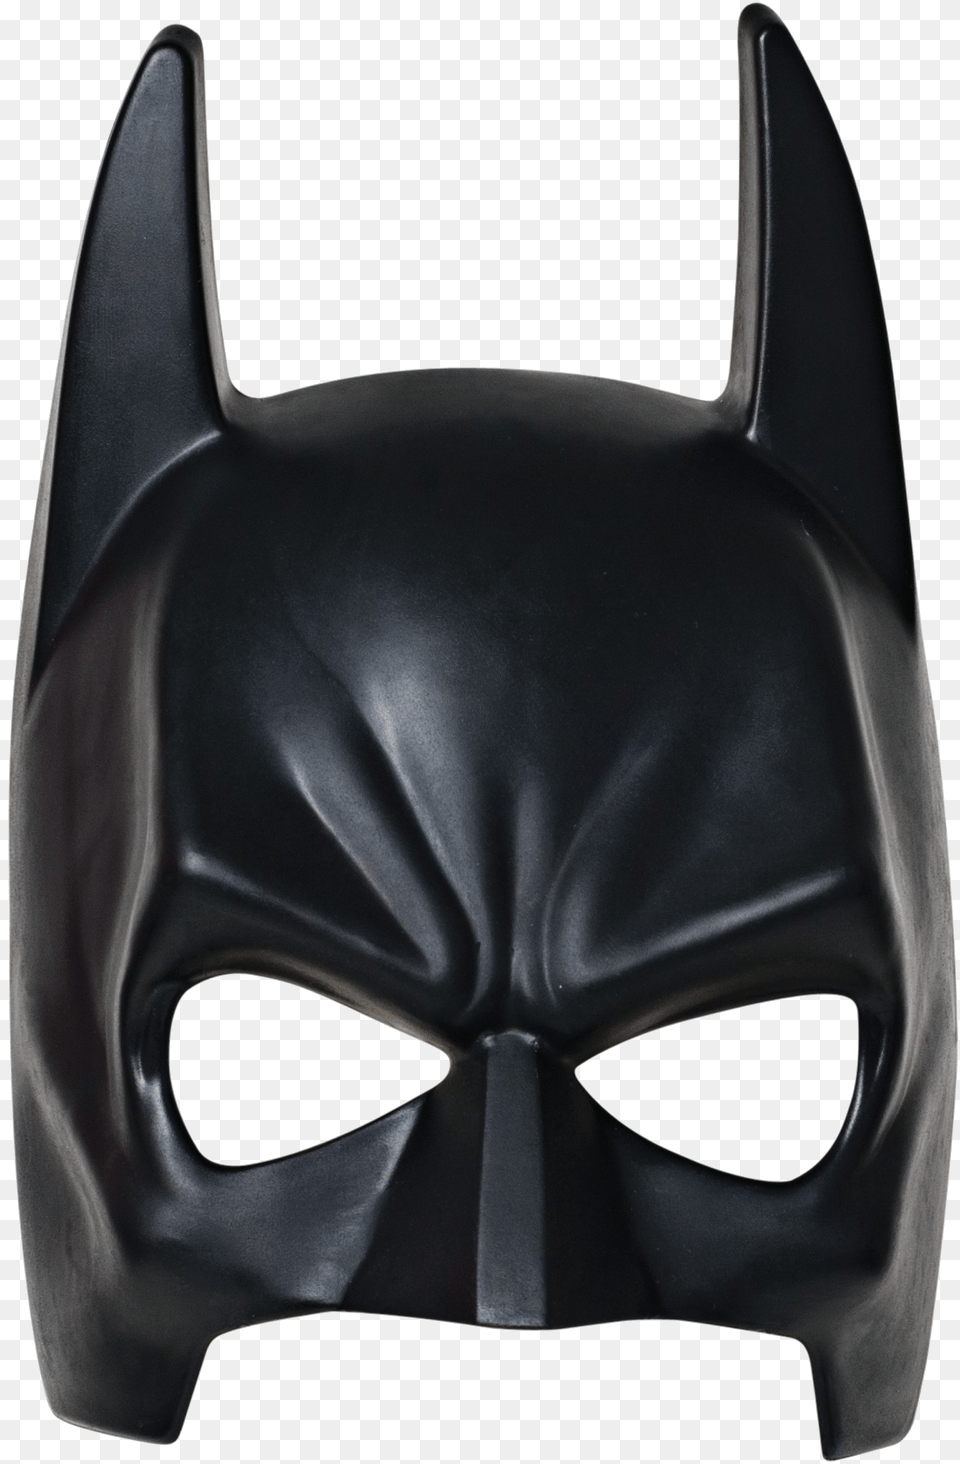 Batman Mask Batman Mask Free Png Download